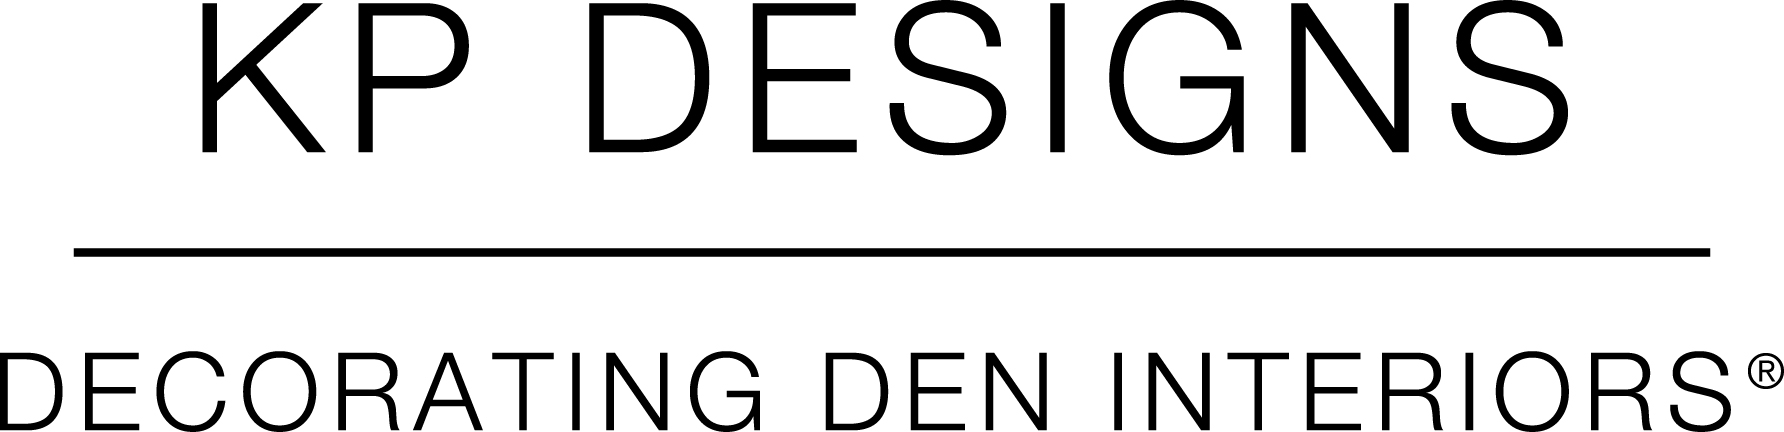 Decorating Den Interiors logo white